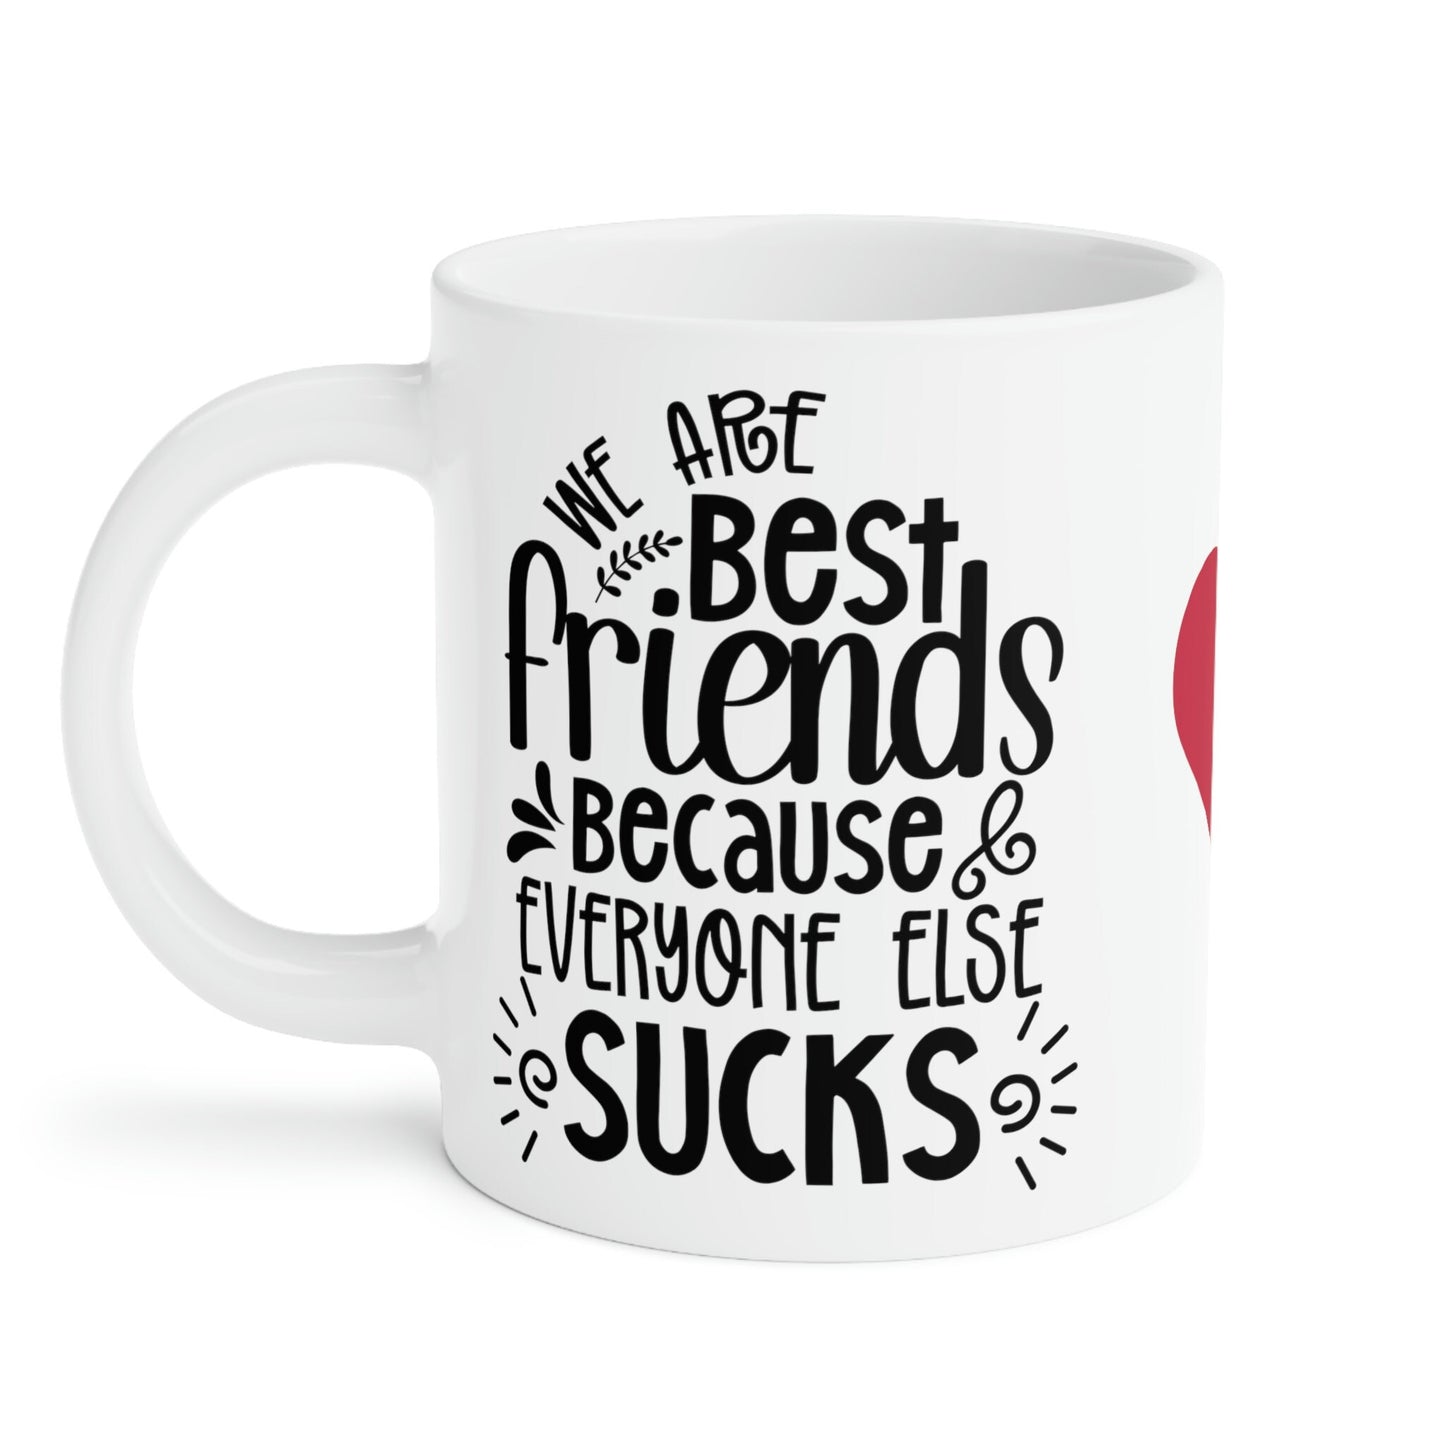 Best friends...everyone else sucks mug - Choice of 3 sizes